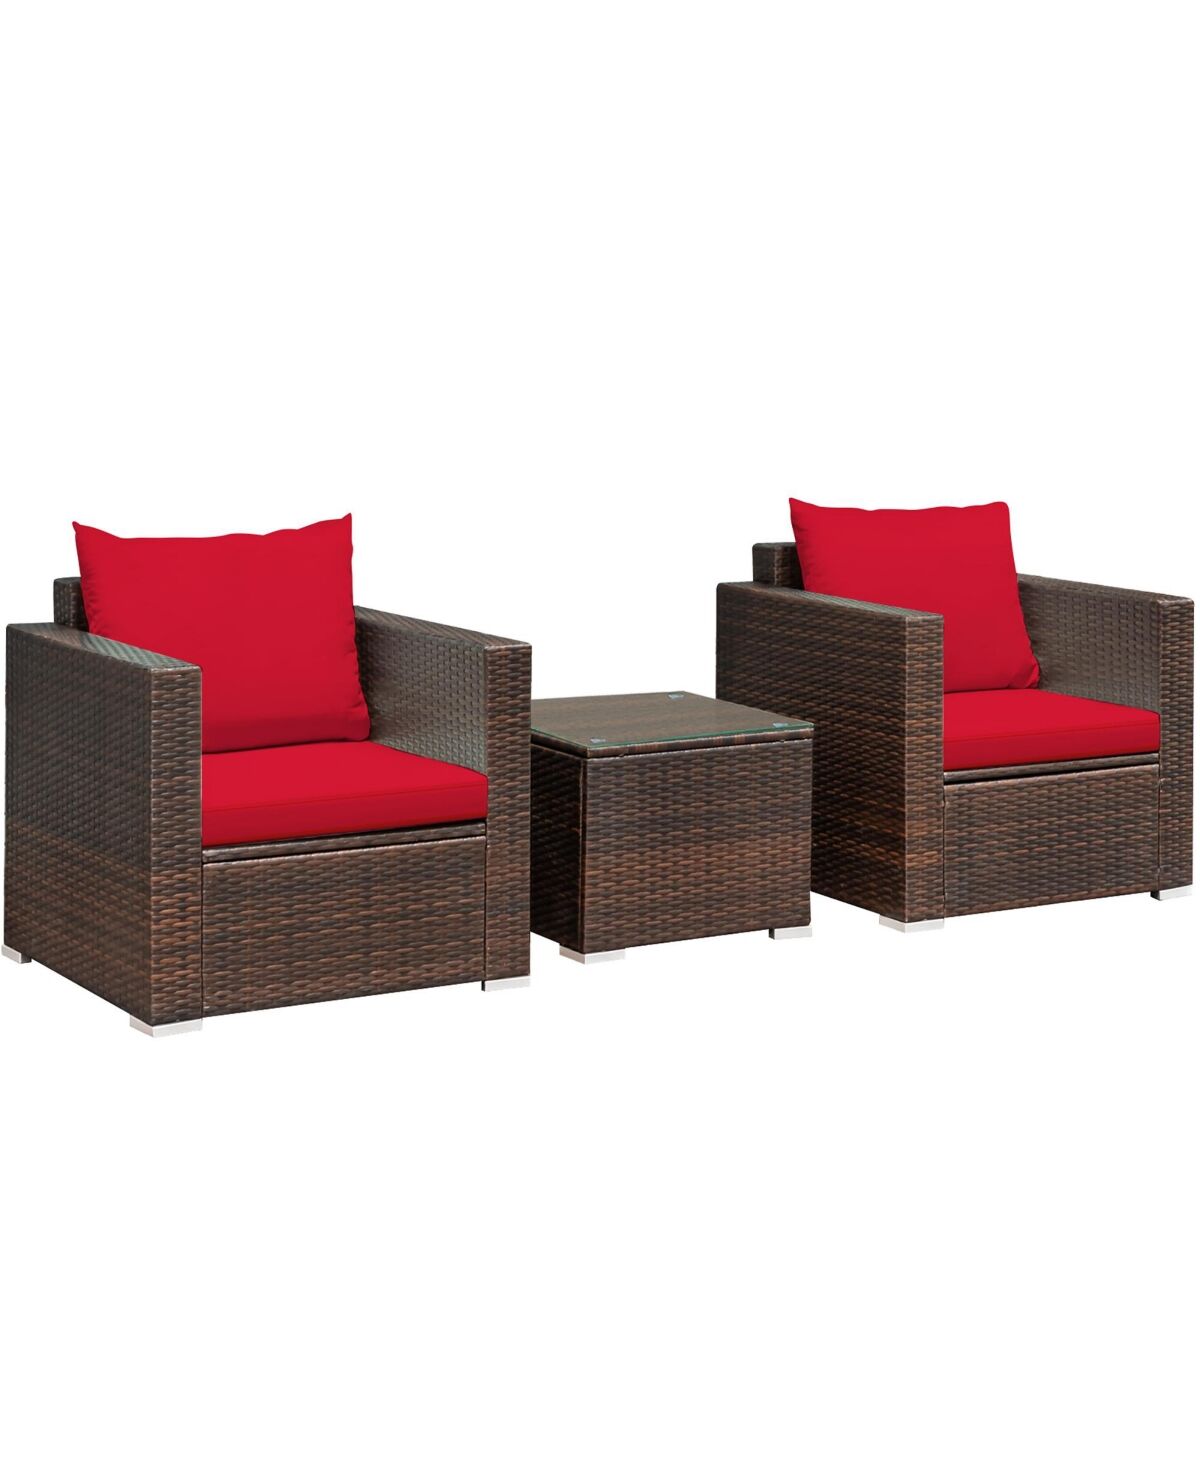 Costway 3PCS Patio Rattan Furniture Set Conversation Sofa Cushioned - Red